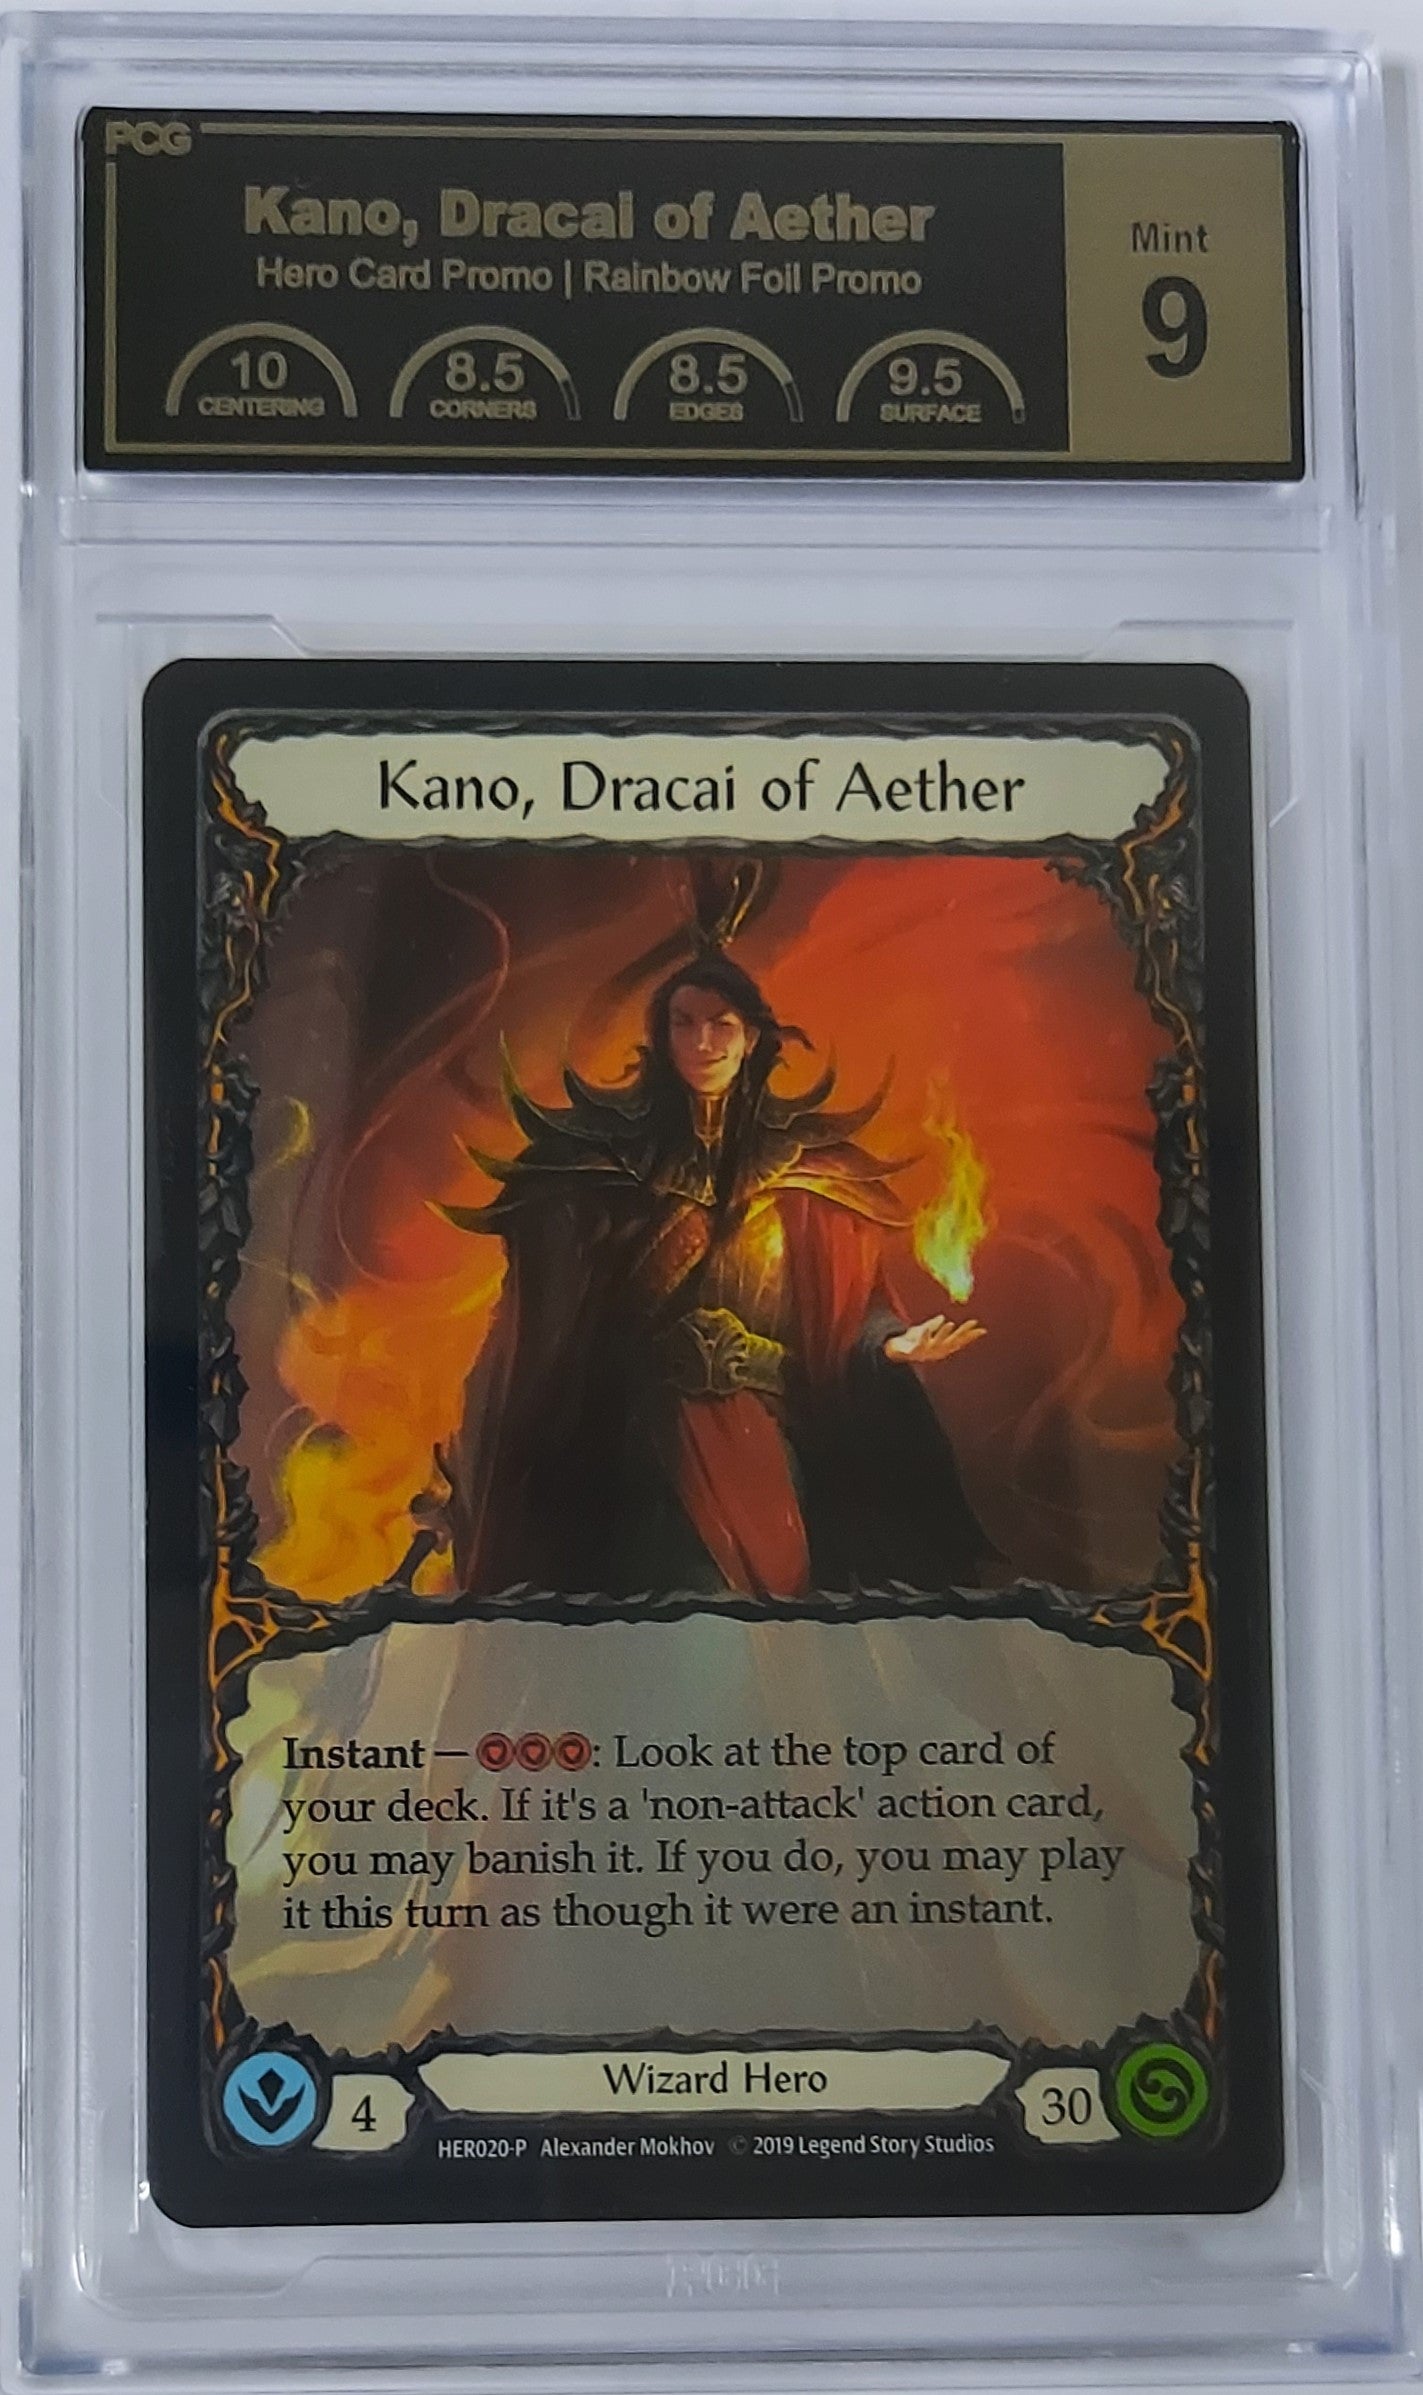 [PCG 9] [Promo] [RF] Kano, Dracai of Aether - HER020